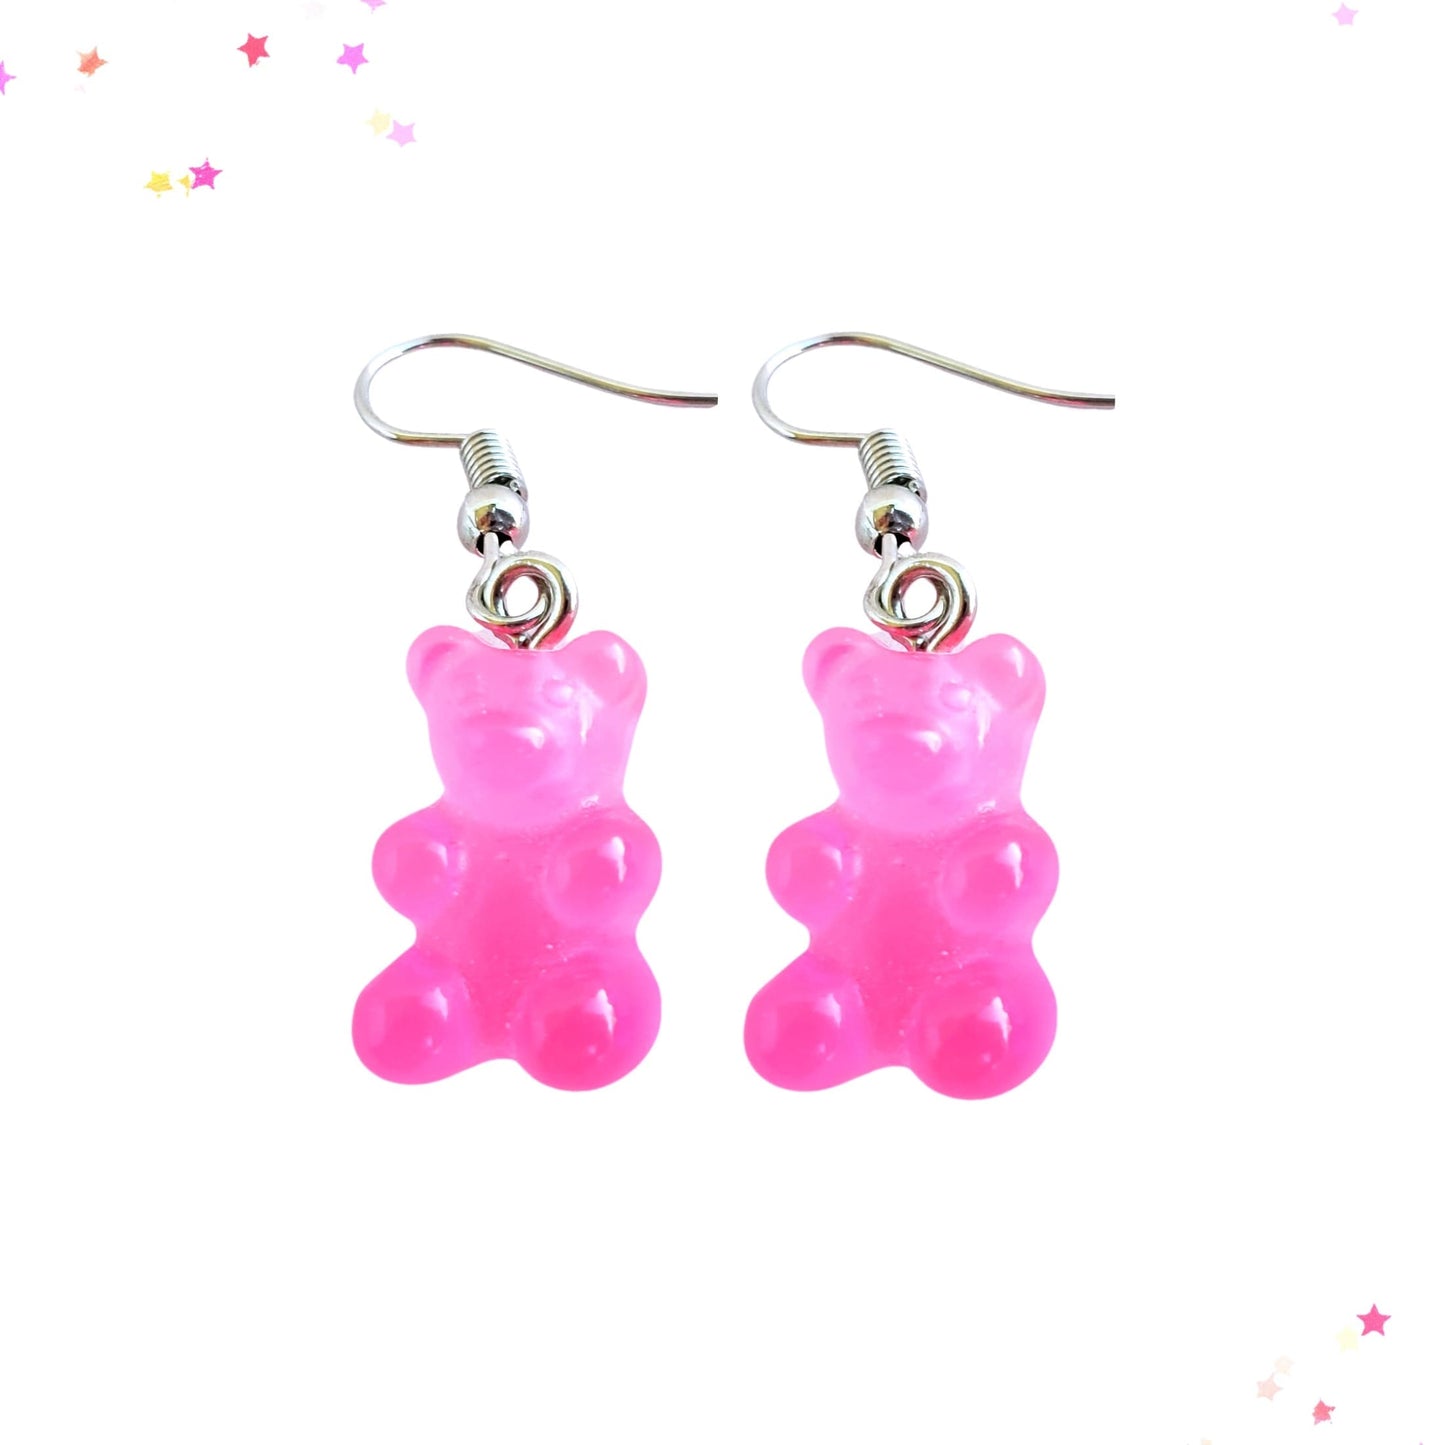 Gummy Bear Drop Earrings in Guava from Confetti Kitty, Only 3.99